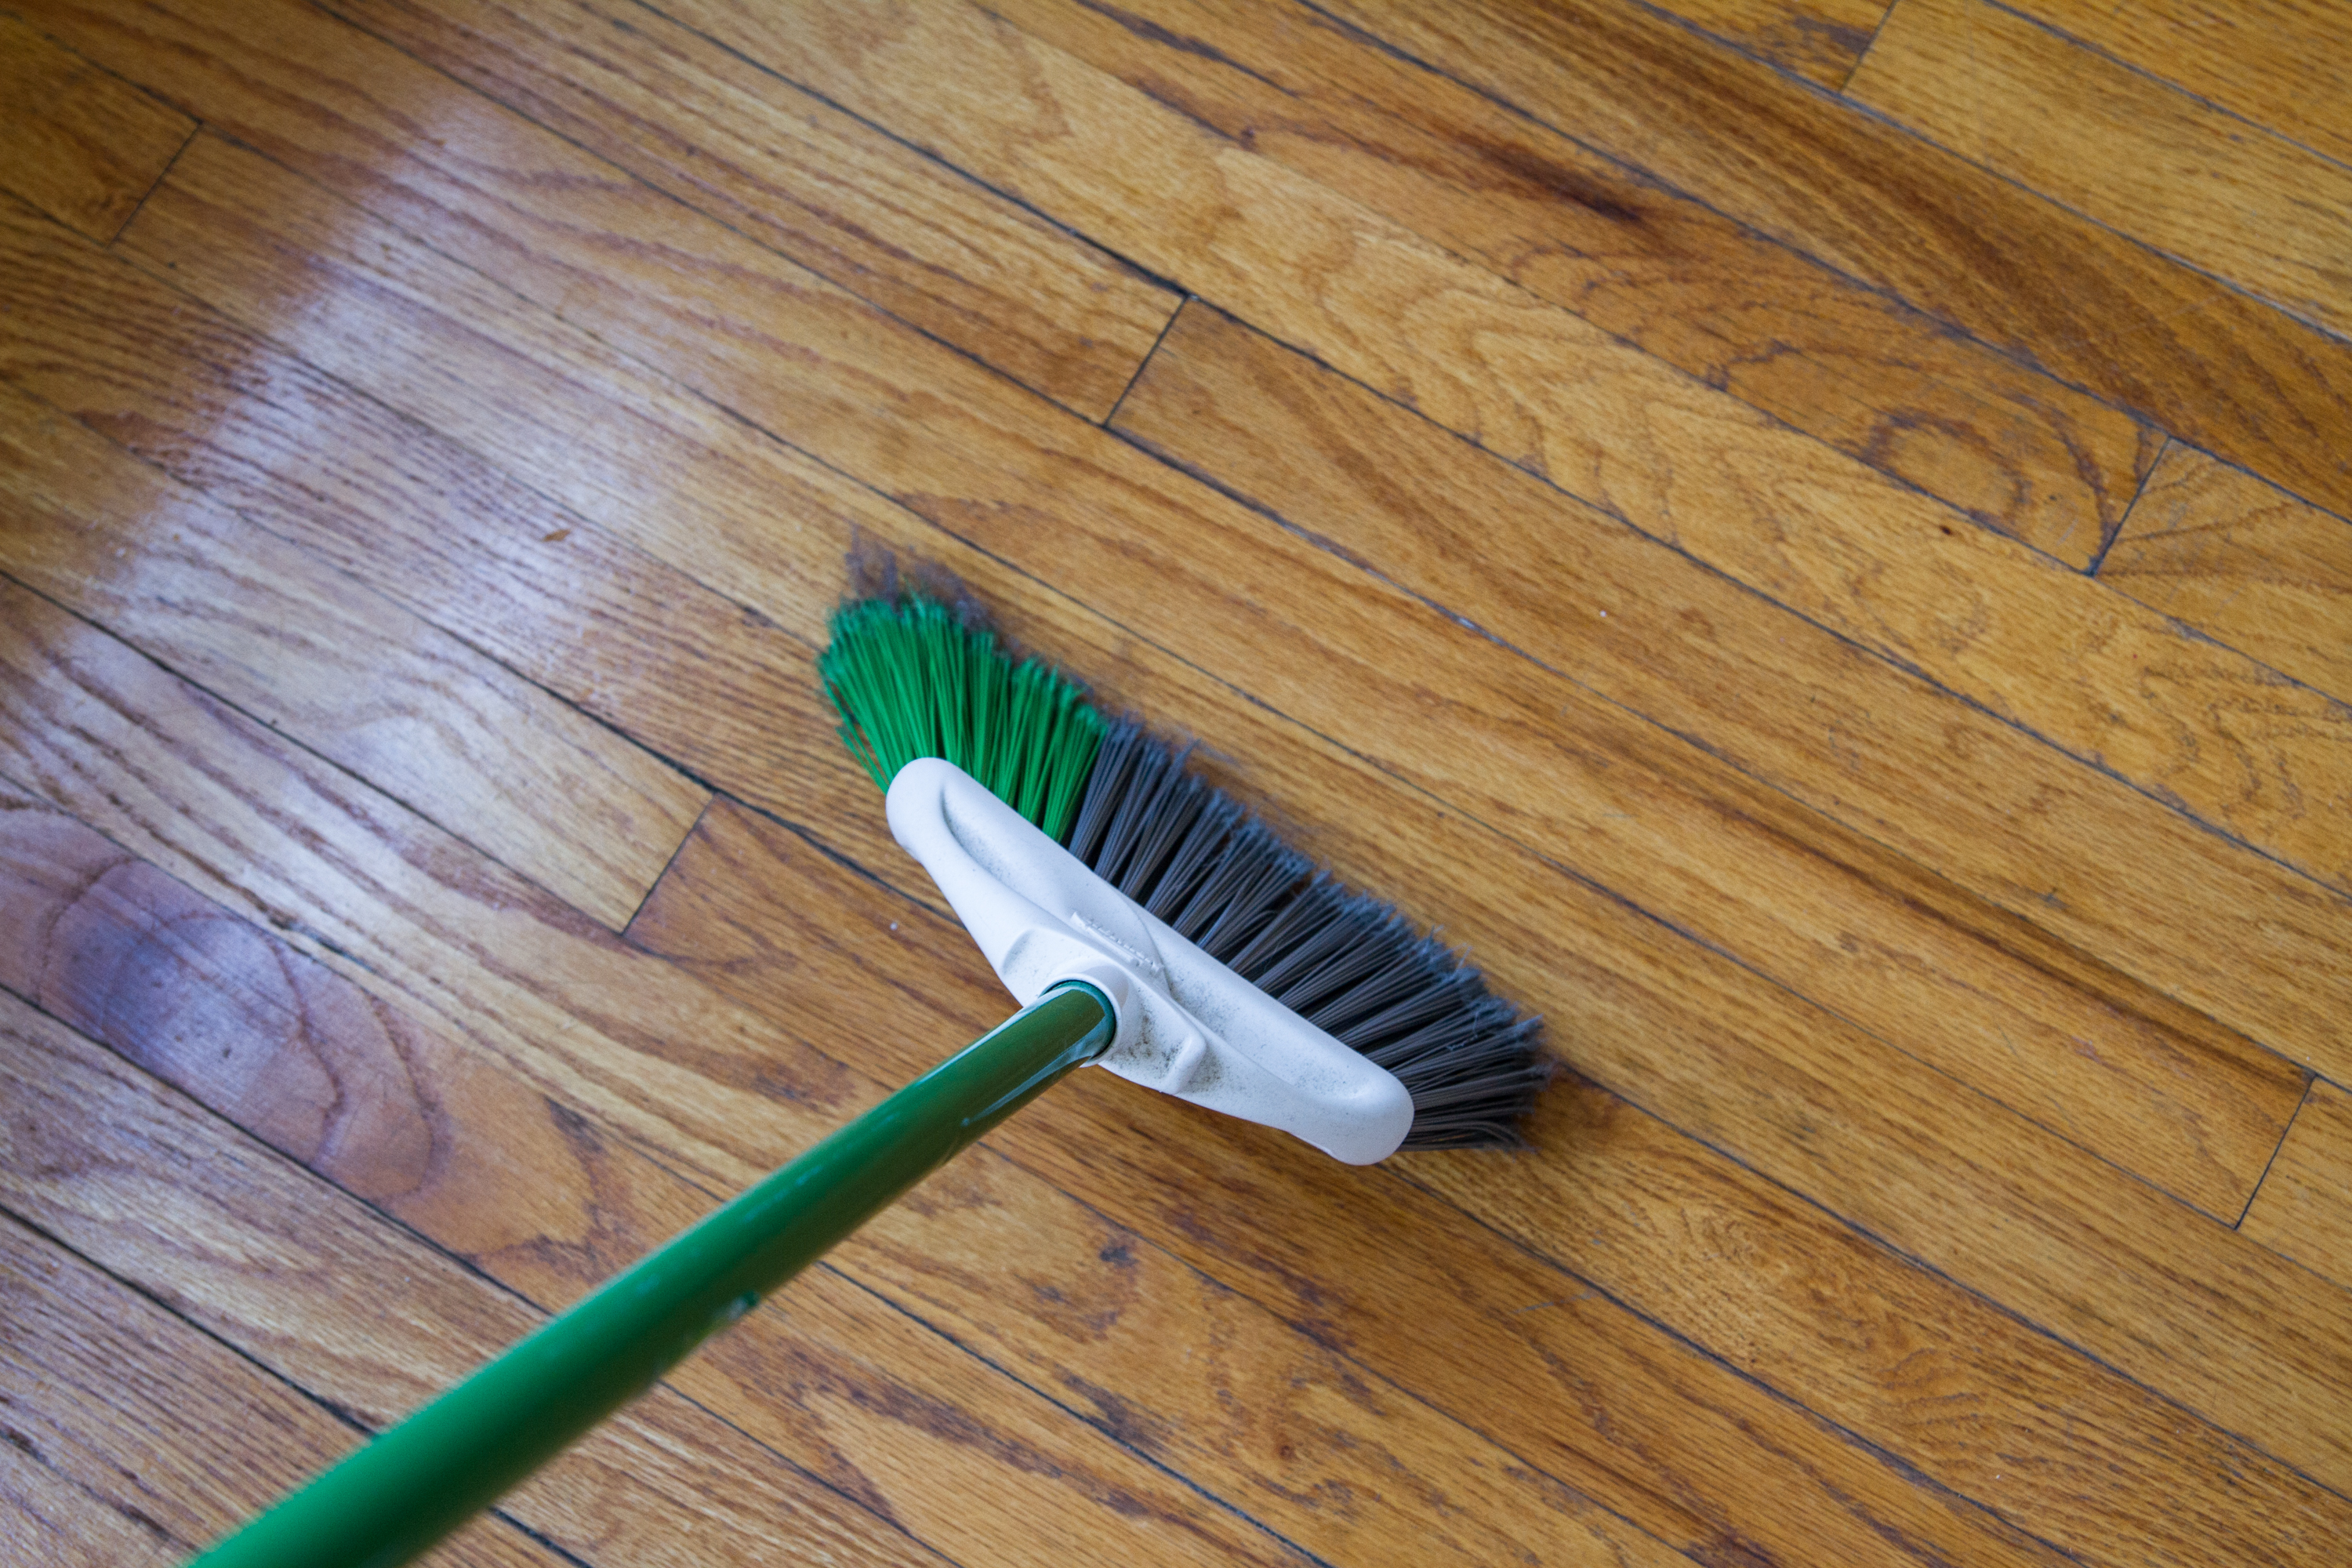 How to Clean Hardwood Floors